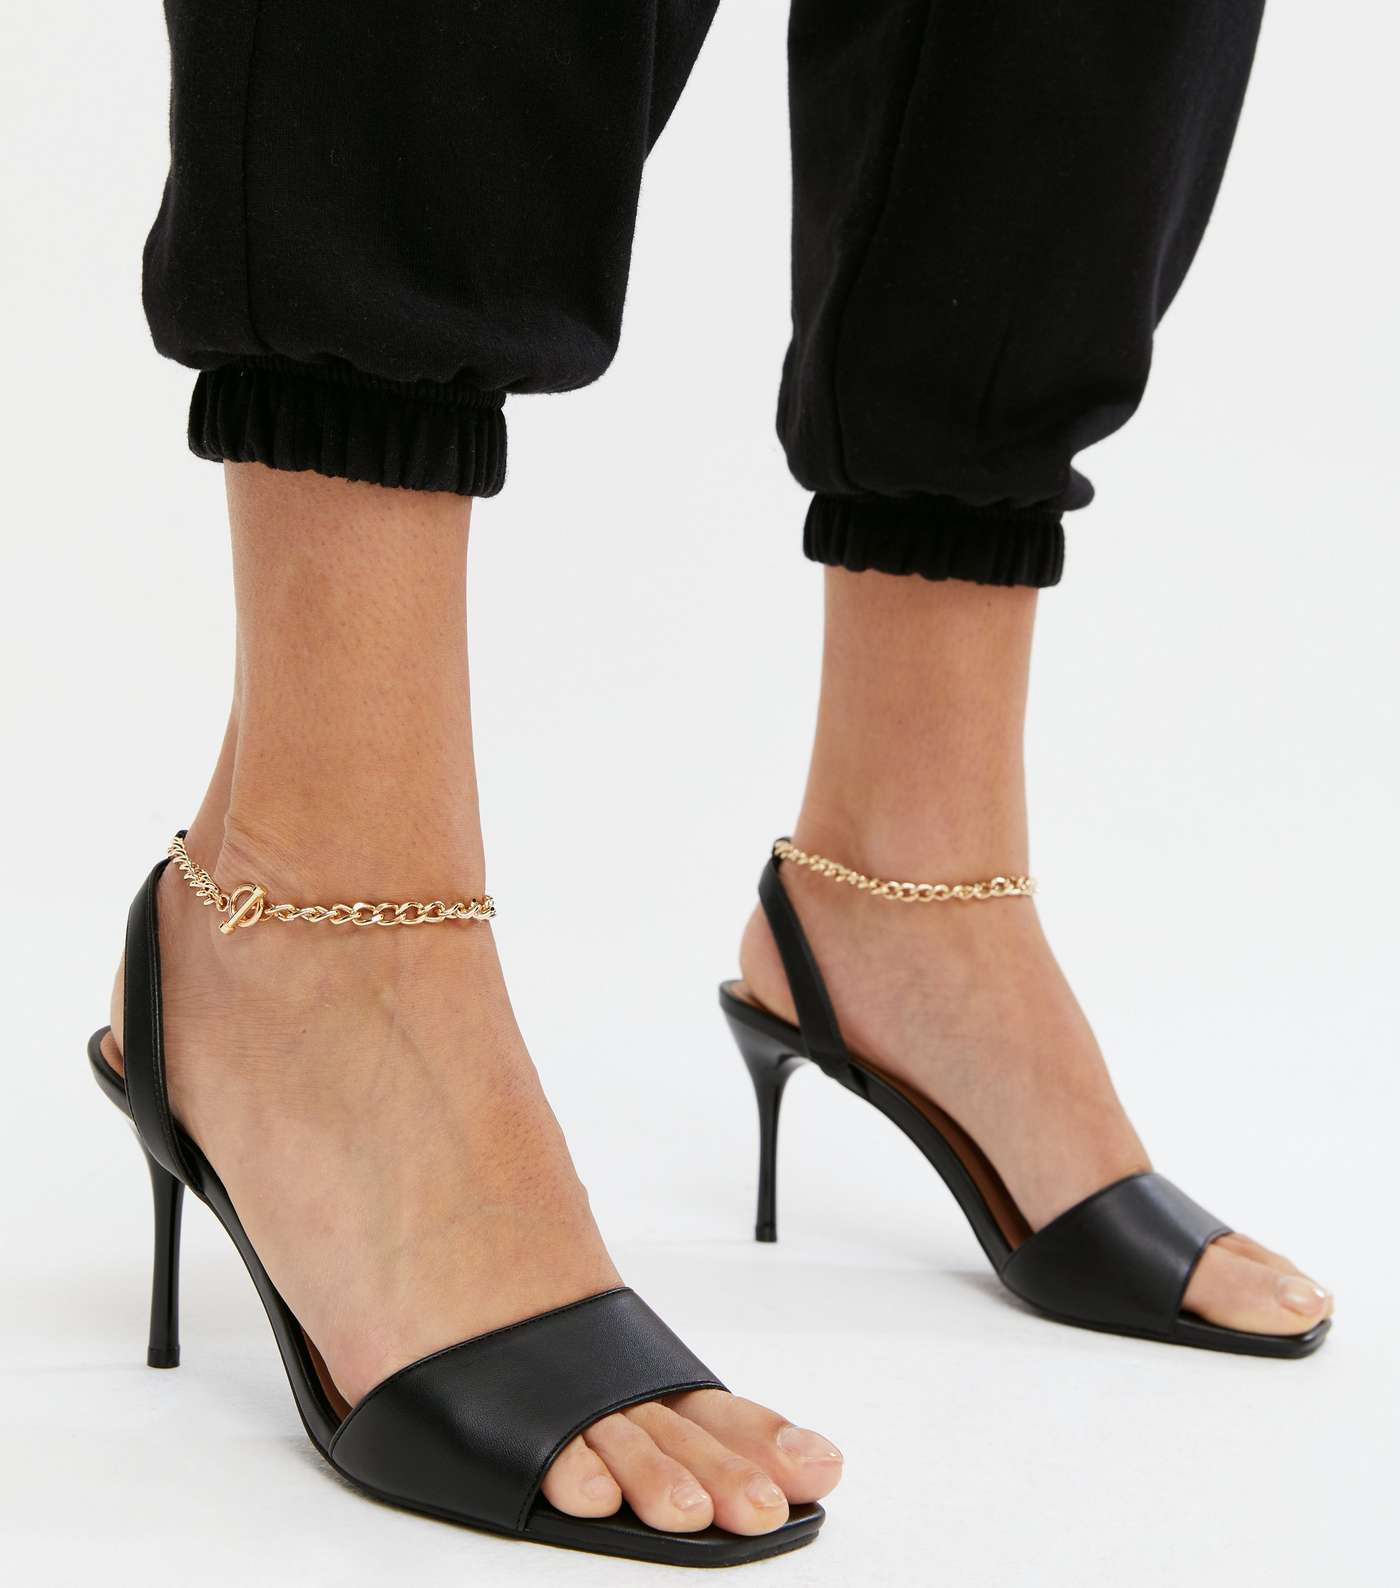 Black Chain Ankle Strap Stiletto Heel Sandals Image 2